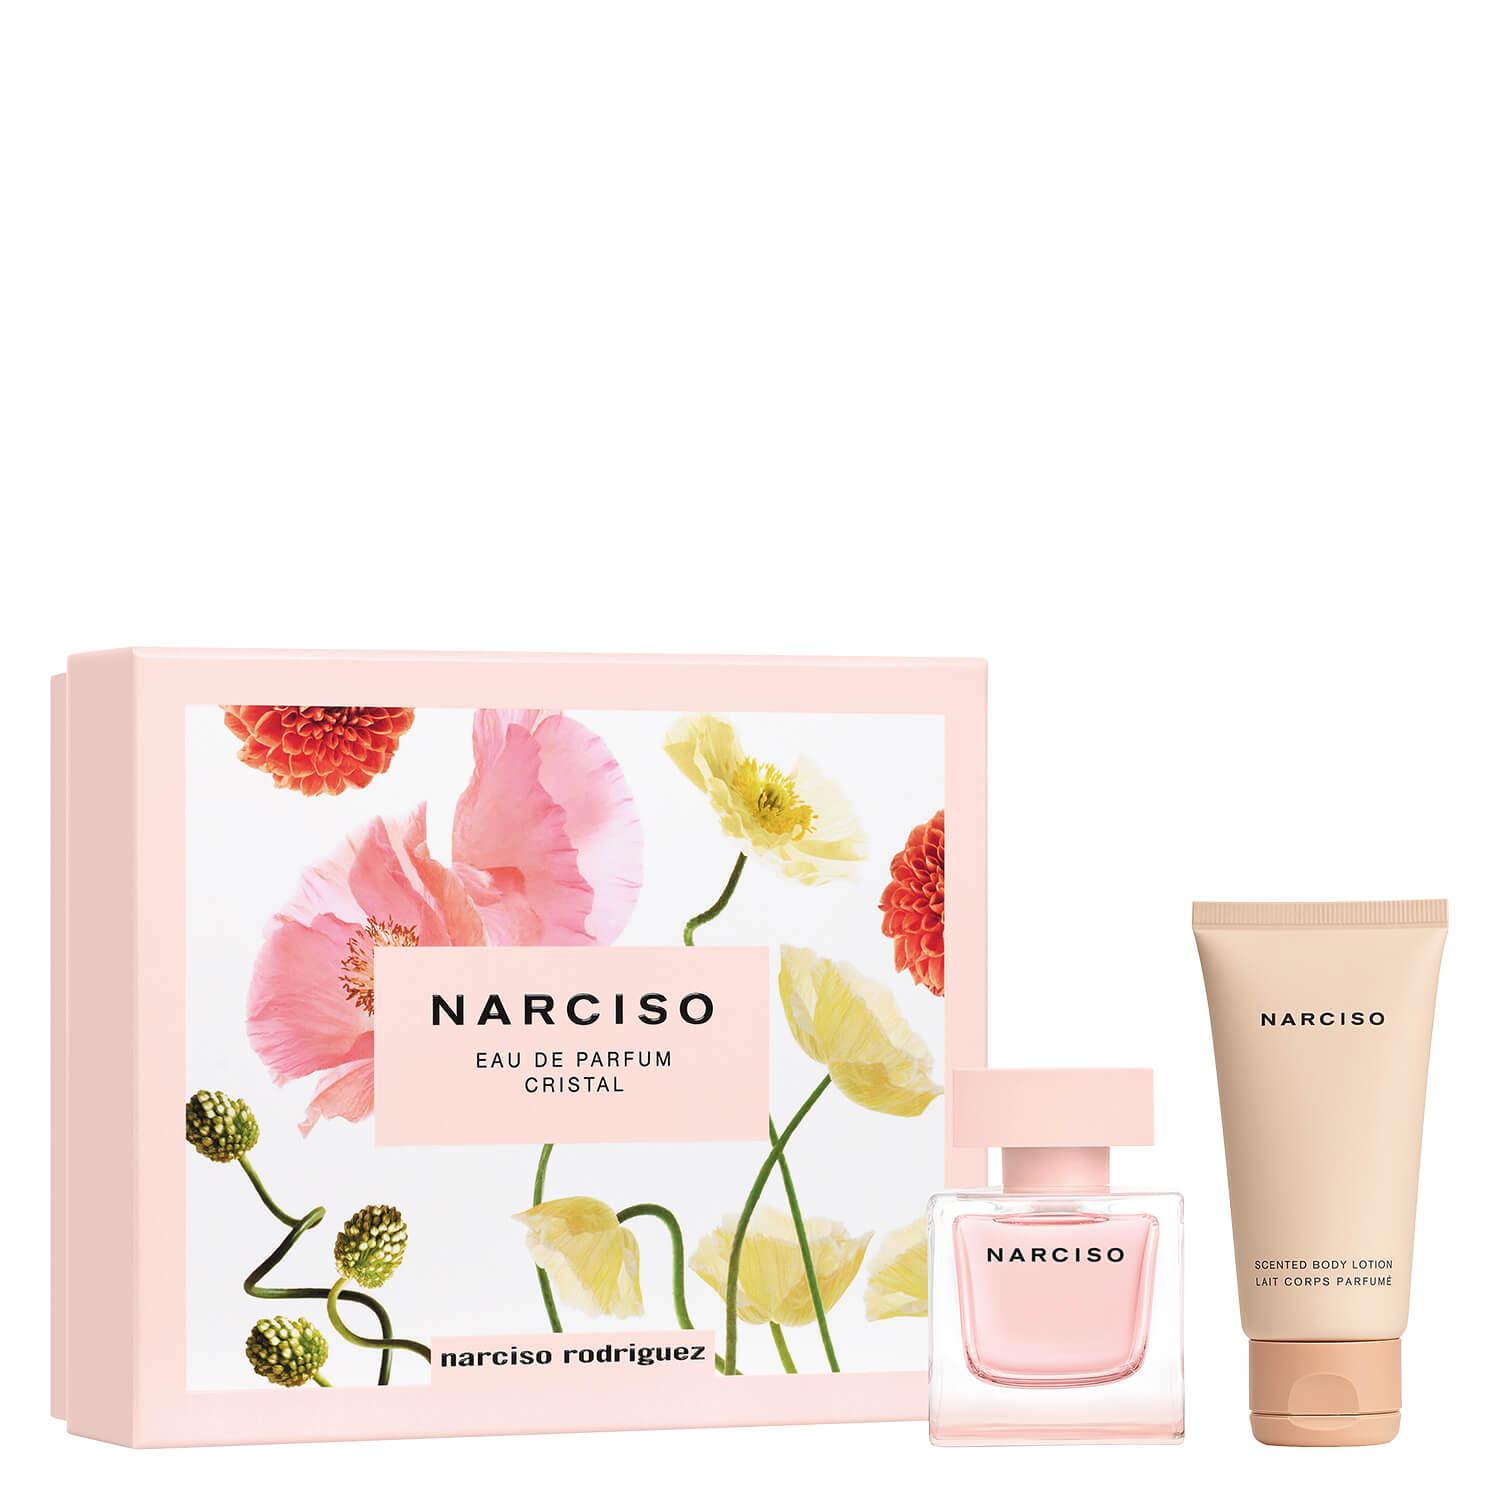 Narciso - Cristal Eau de Parfum Spring